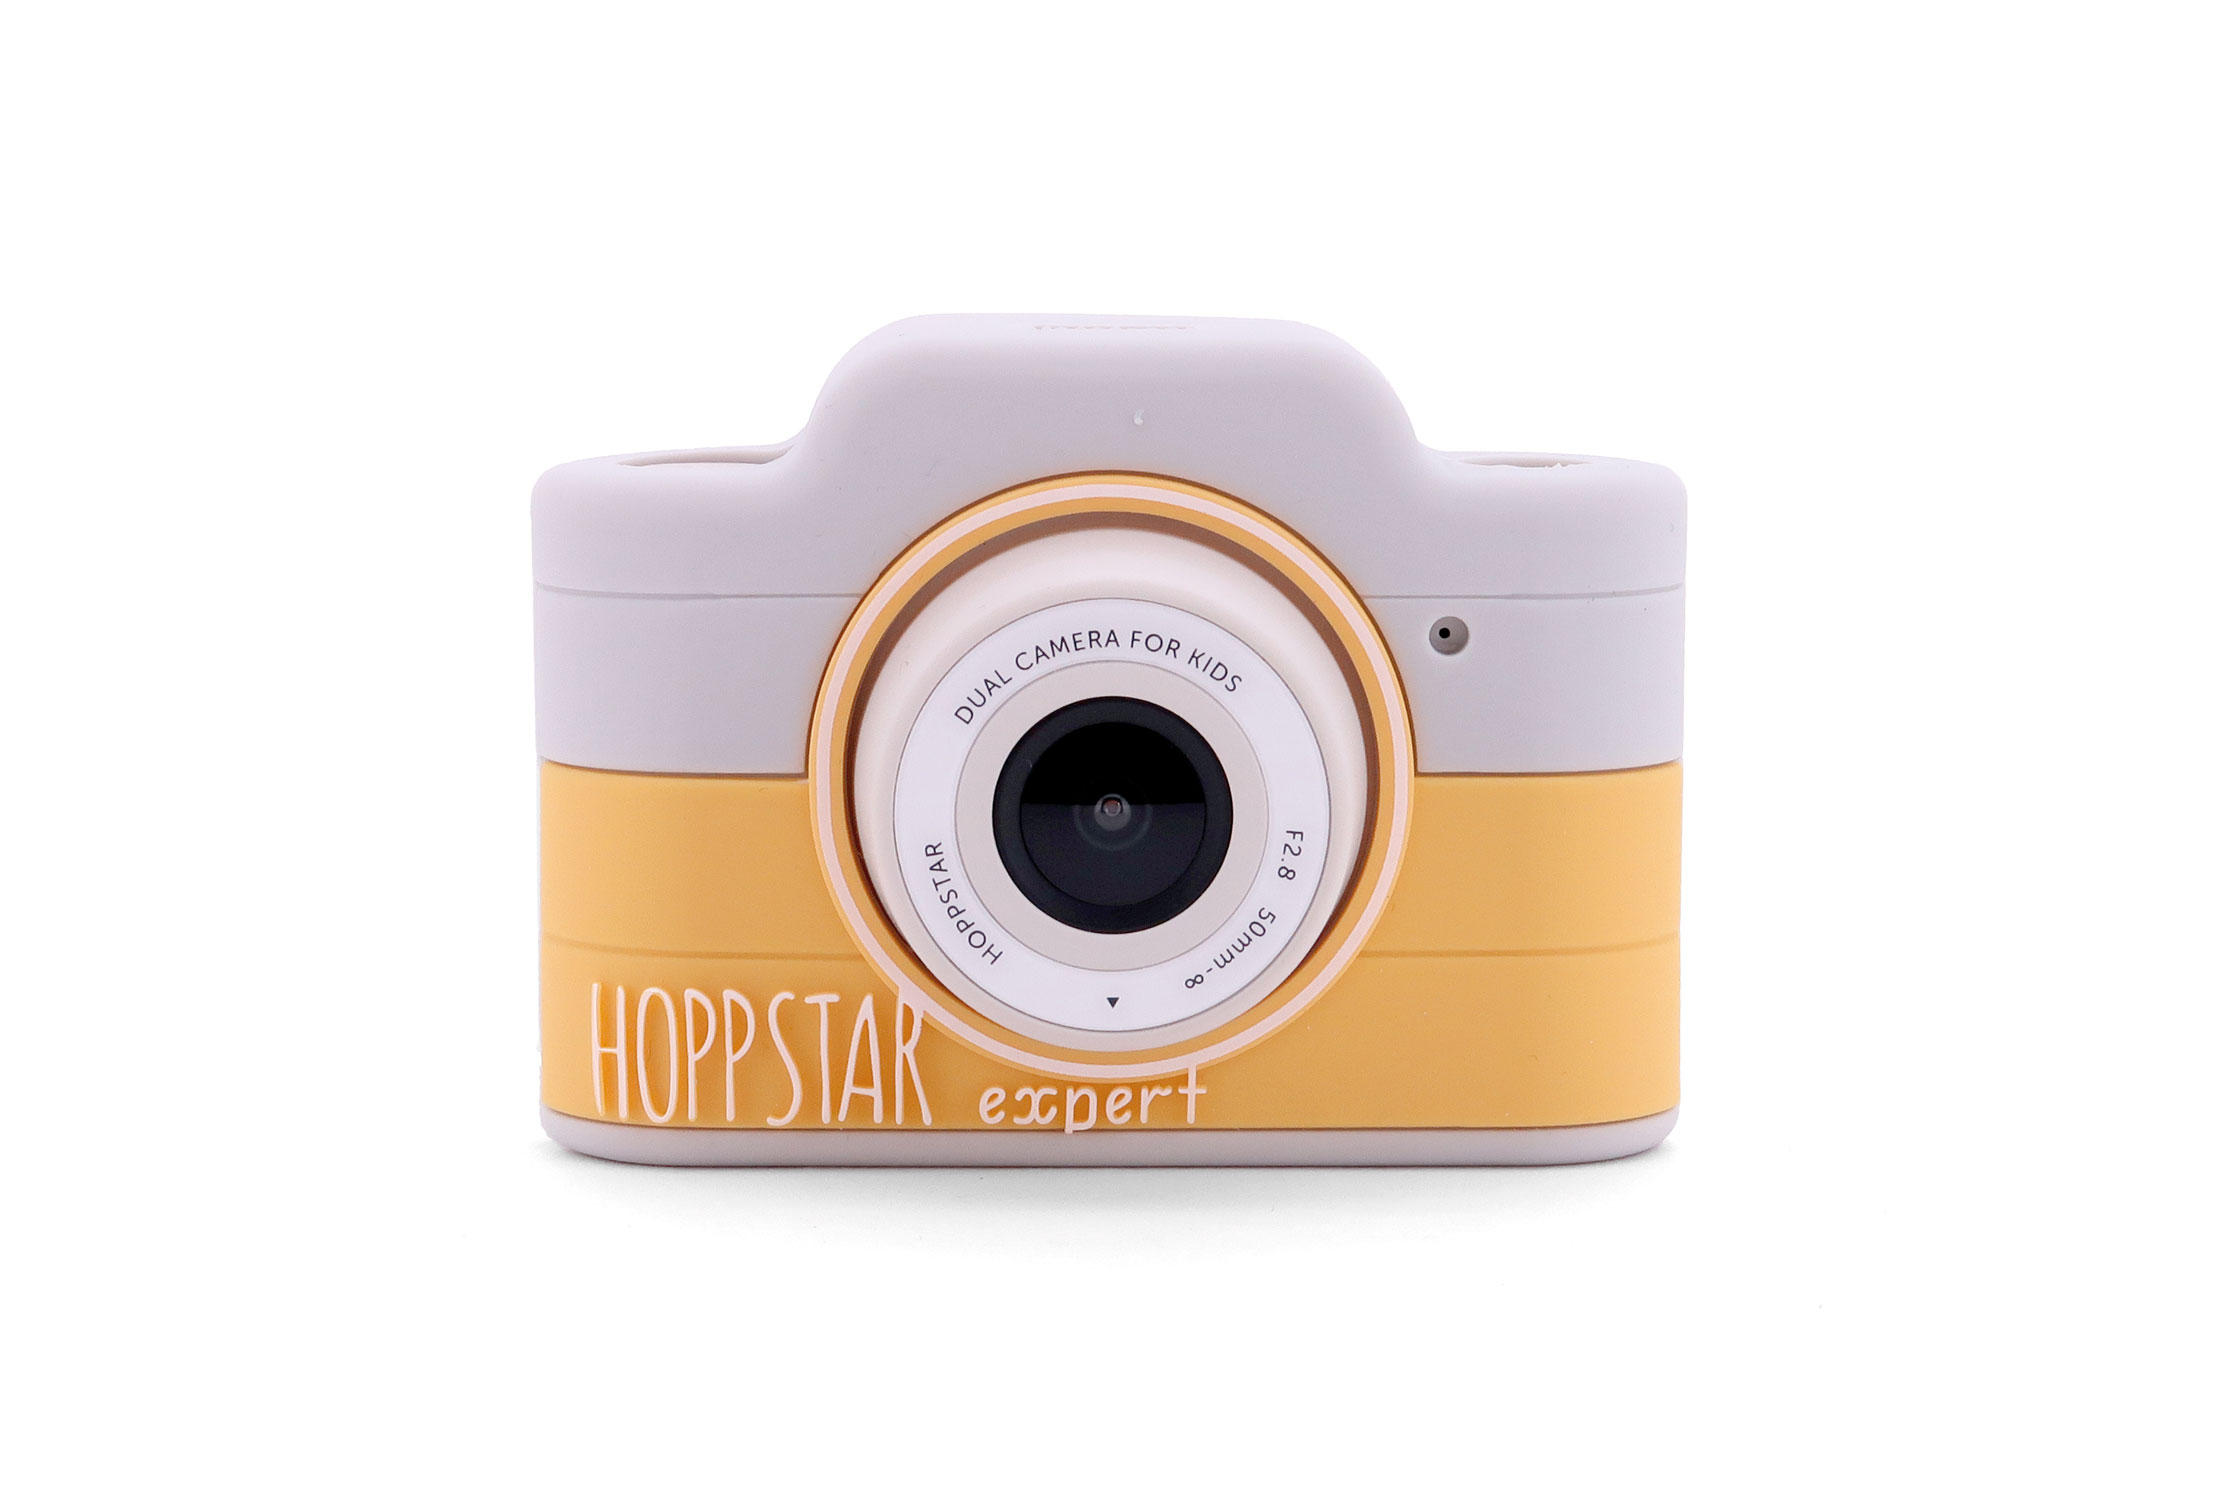 Hoppstar Expert Kamera mit Citron (gelb/weiß) Silikonhülle, Frontalansicht